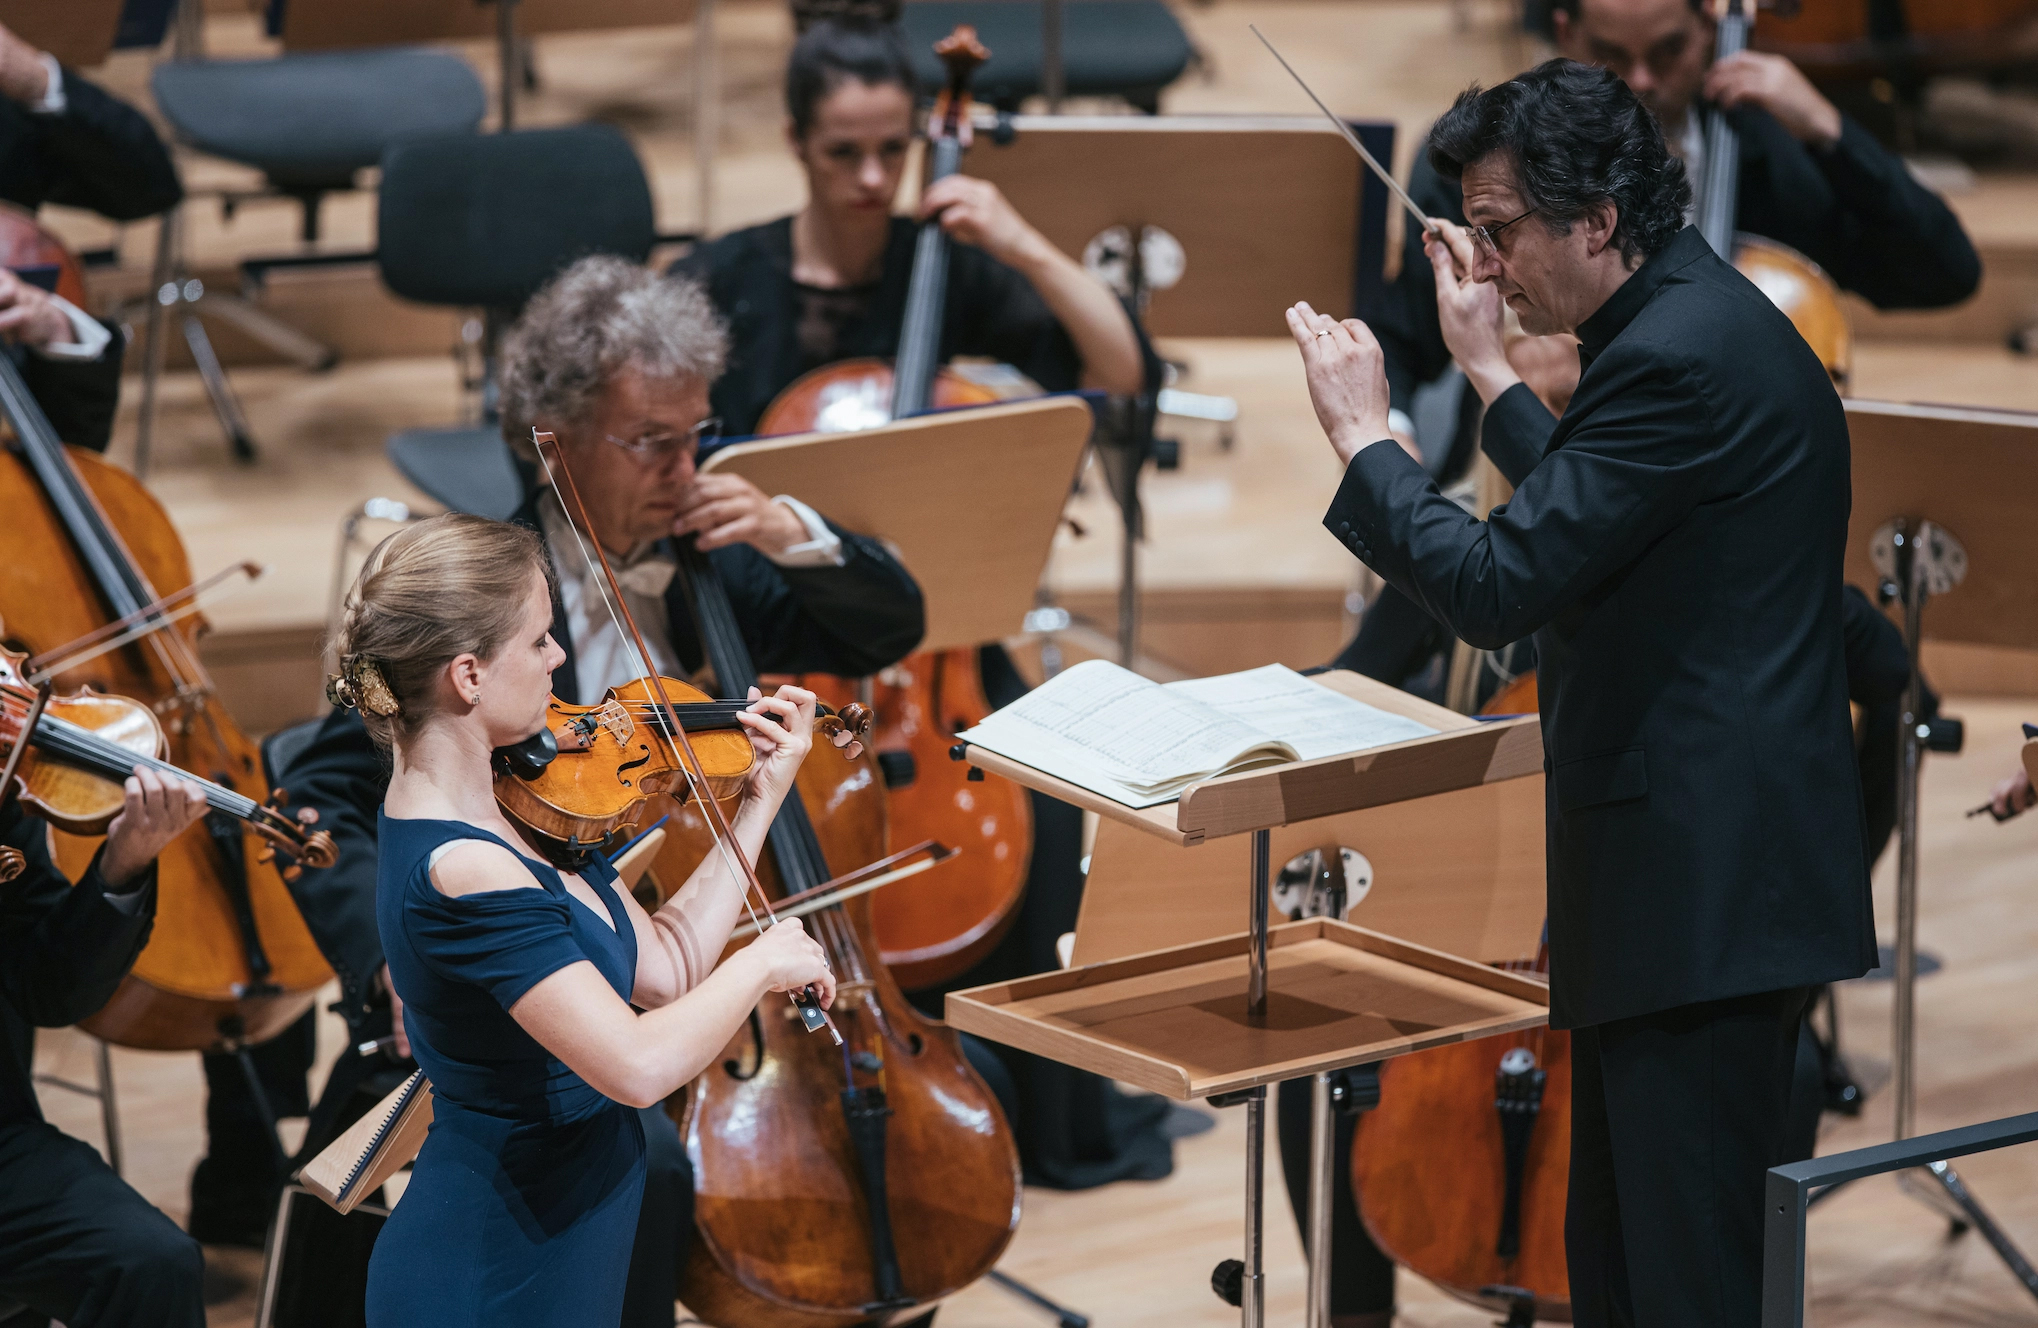 Michael Sanderling principle conductor of the Dresden Philharmonic between 2011-2019